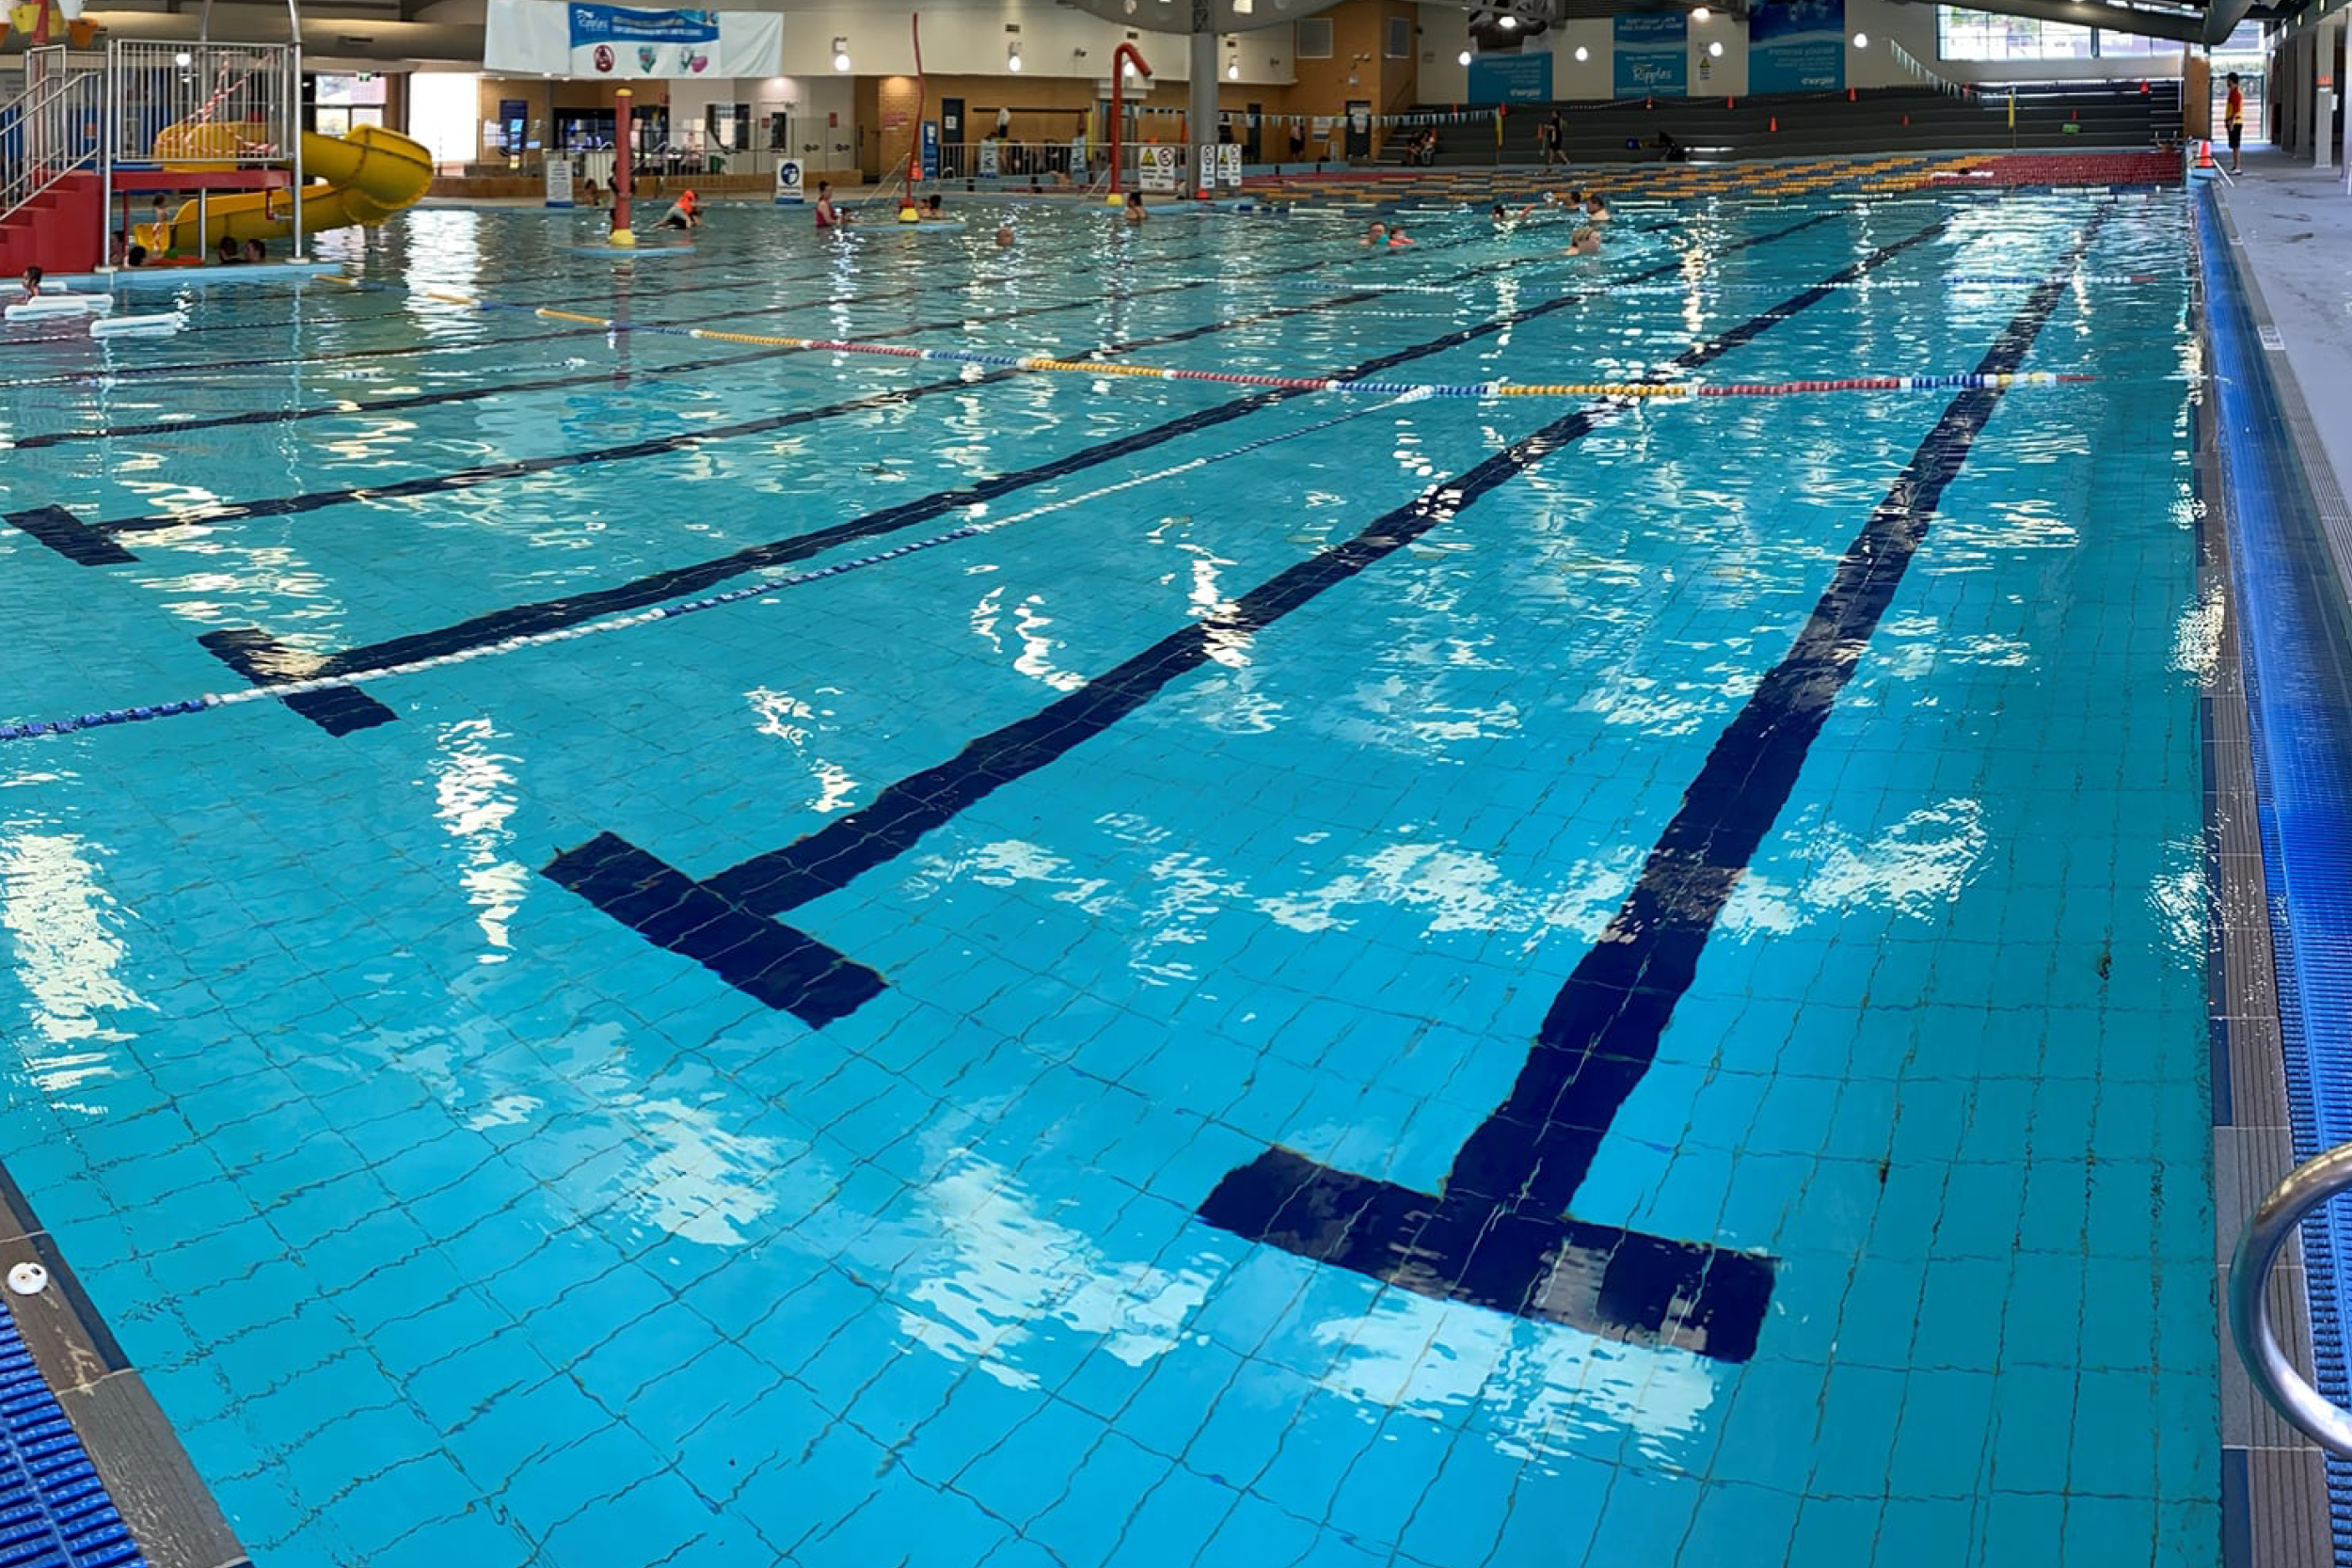 Update: Temporary closure of St Marys Indoor Pool